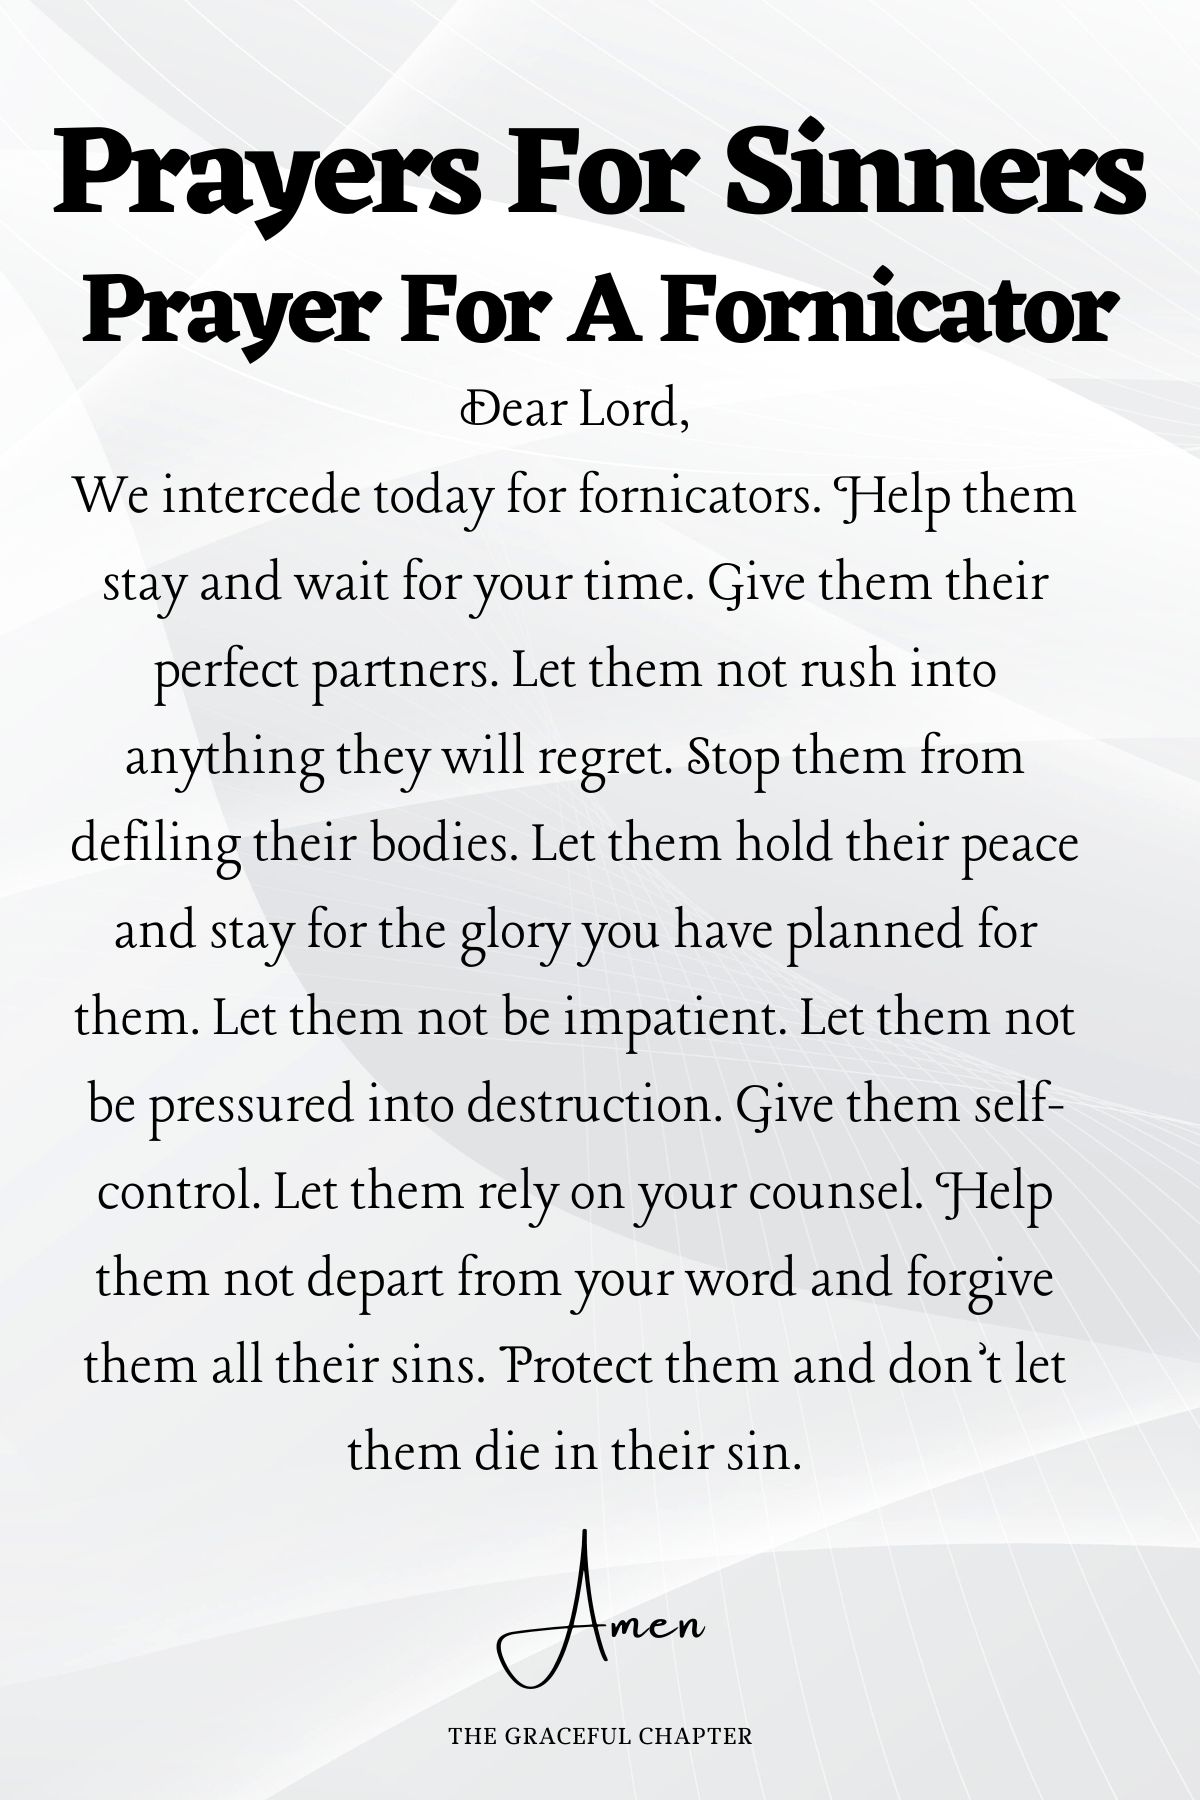 Prayer for a fornicator